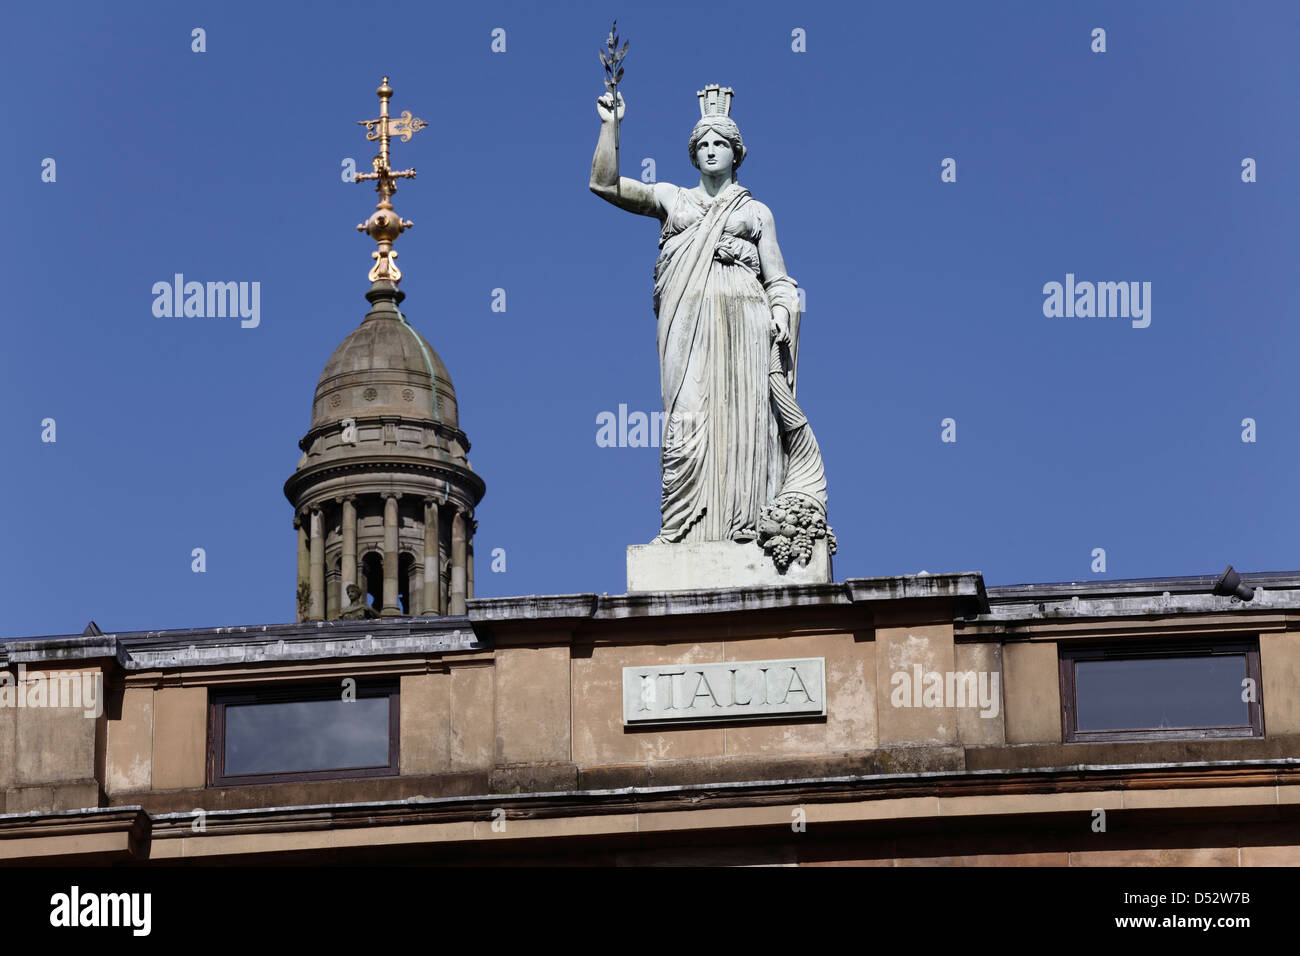 The neo-classical statue Italia by Alexander Stoddart above the Italian centre, Ingram Street, Glasgow city centre, Scotland, UK Stock Photo